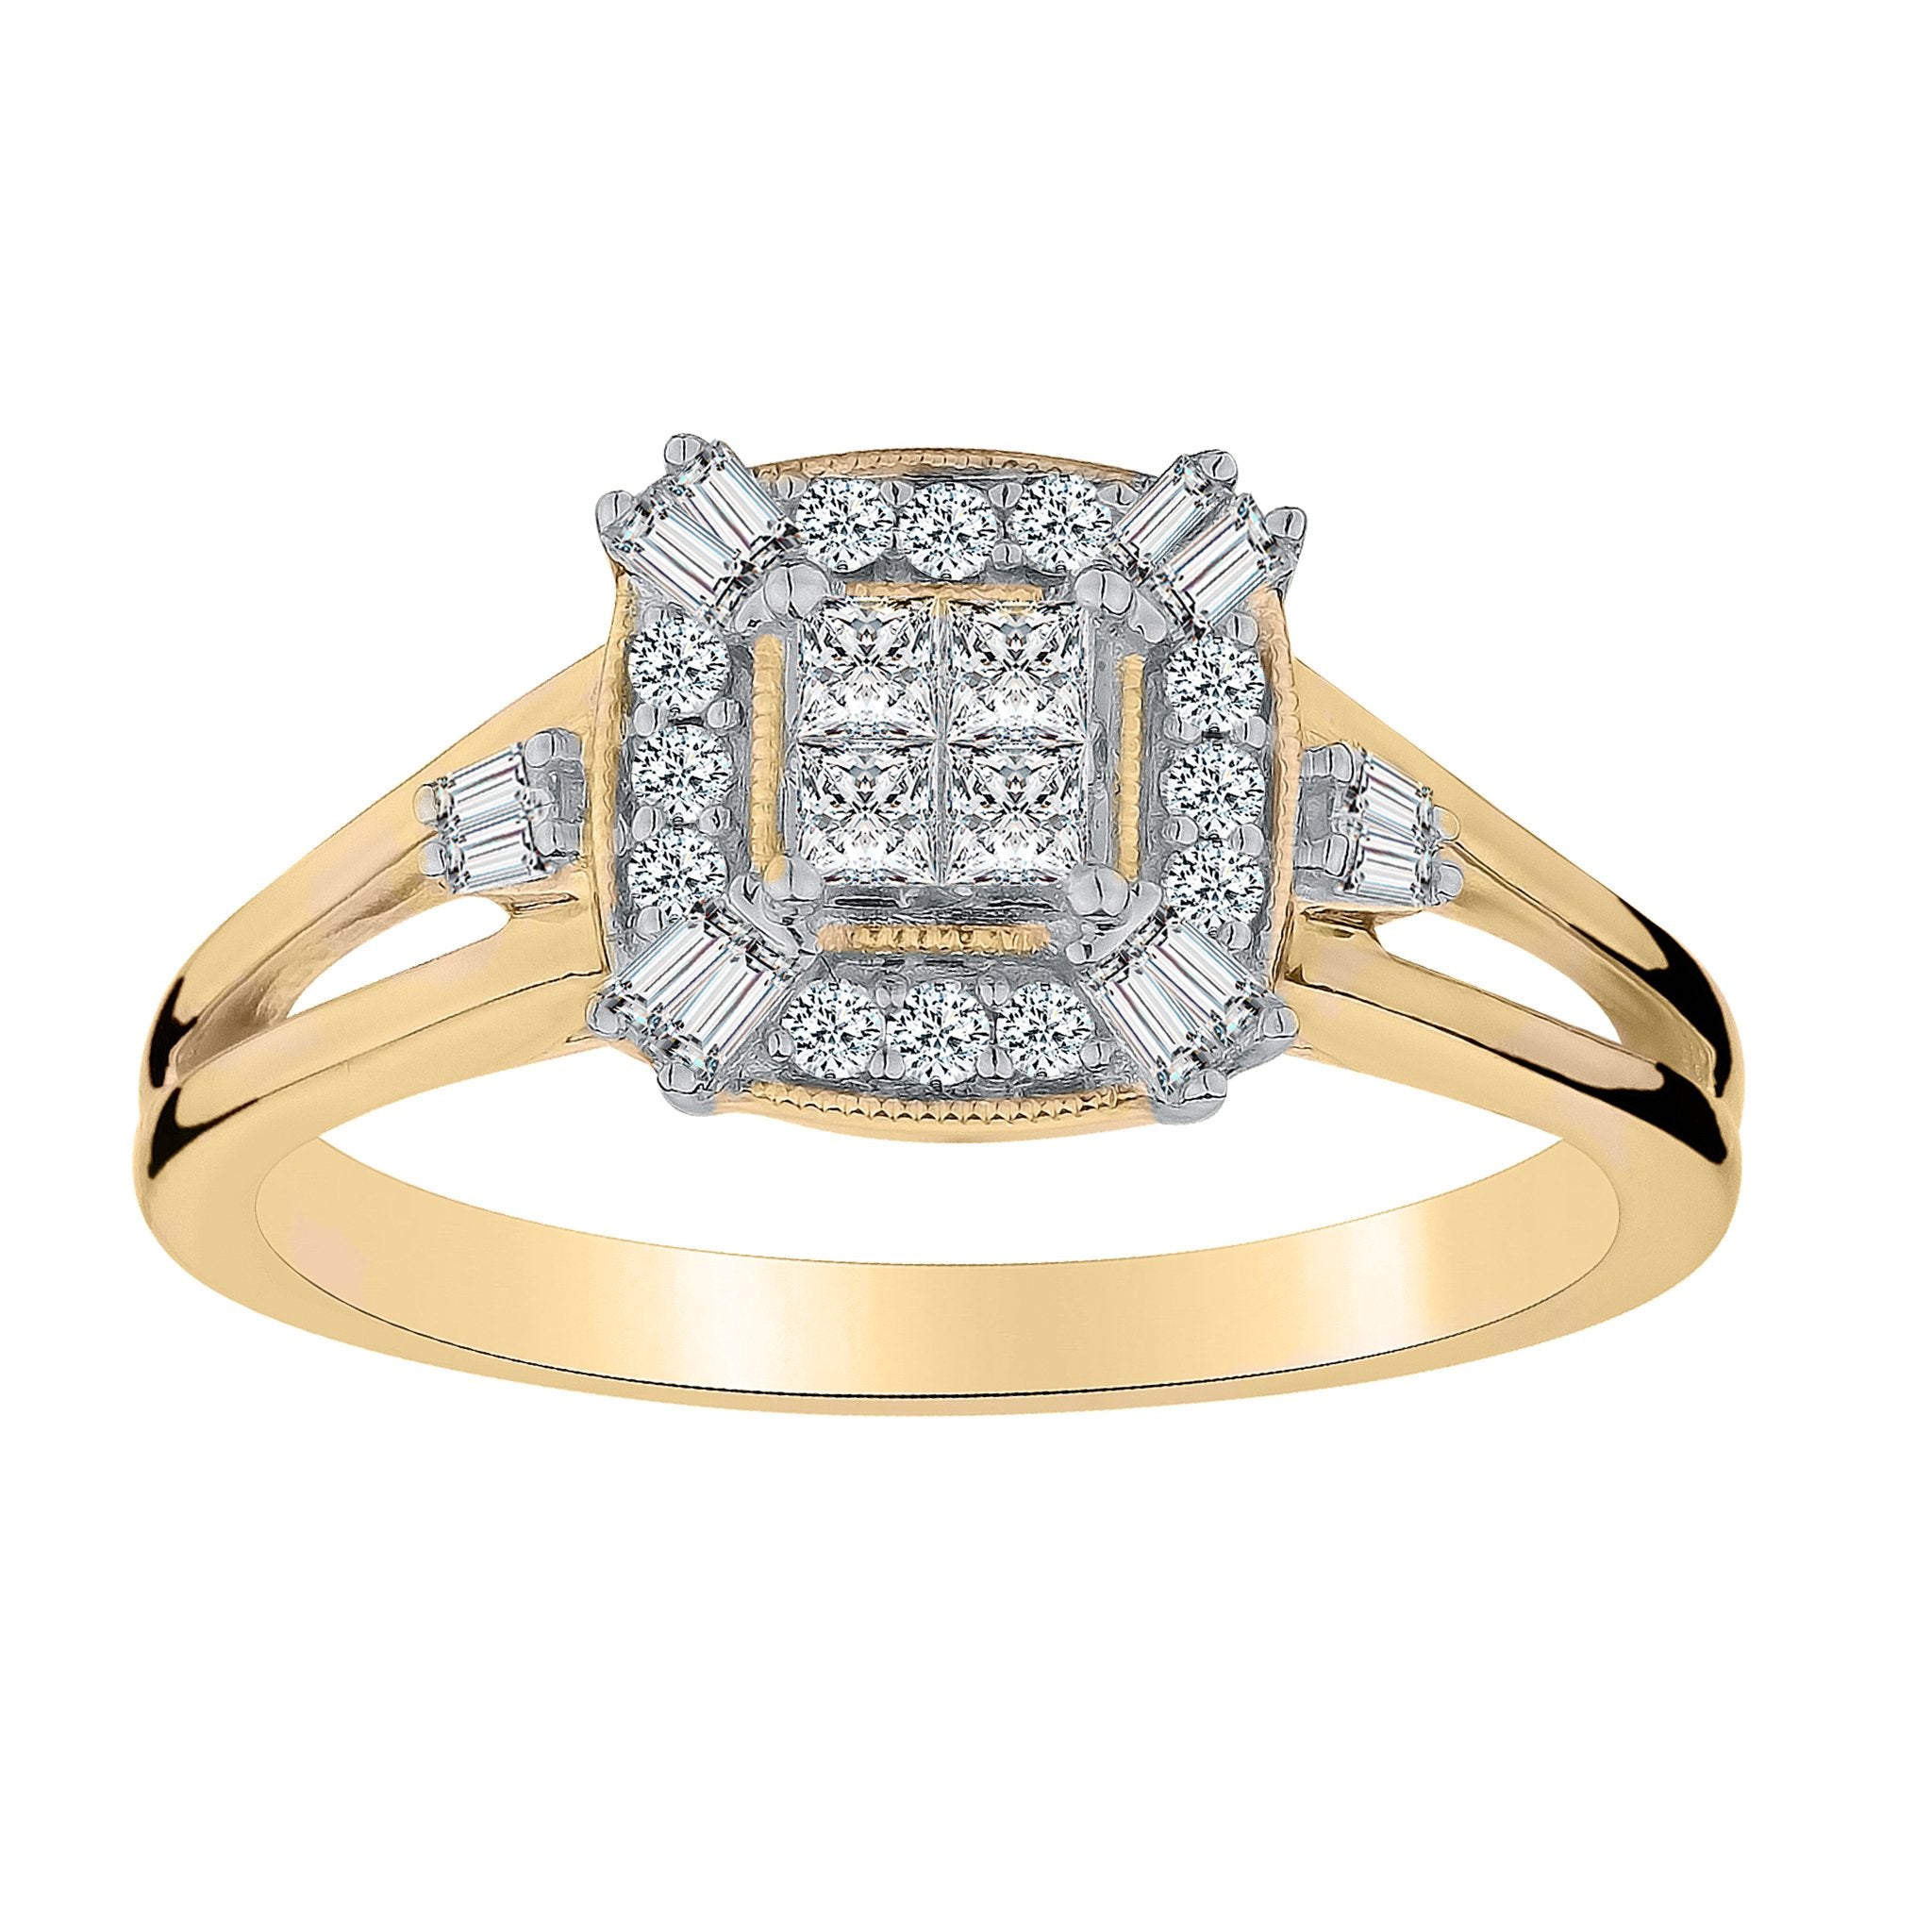 .35 CARAT DIAMOND RING, 10kt YELLOW GOLD - Griffin Jewellery Designs